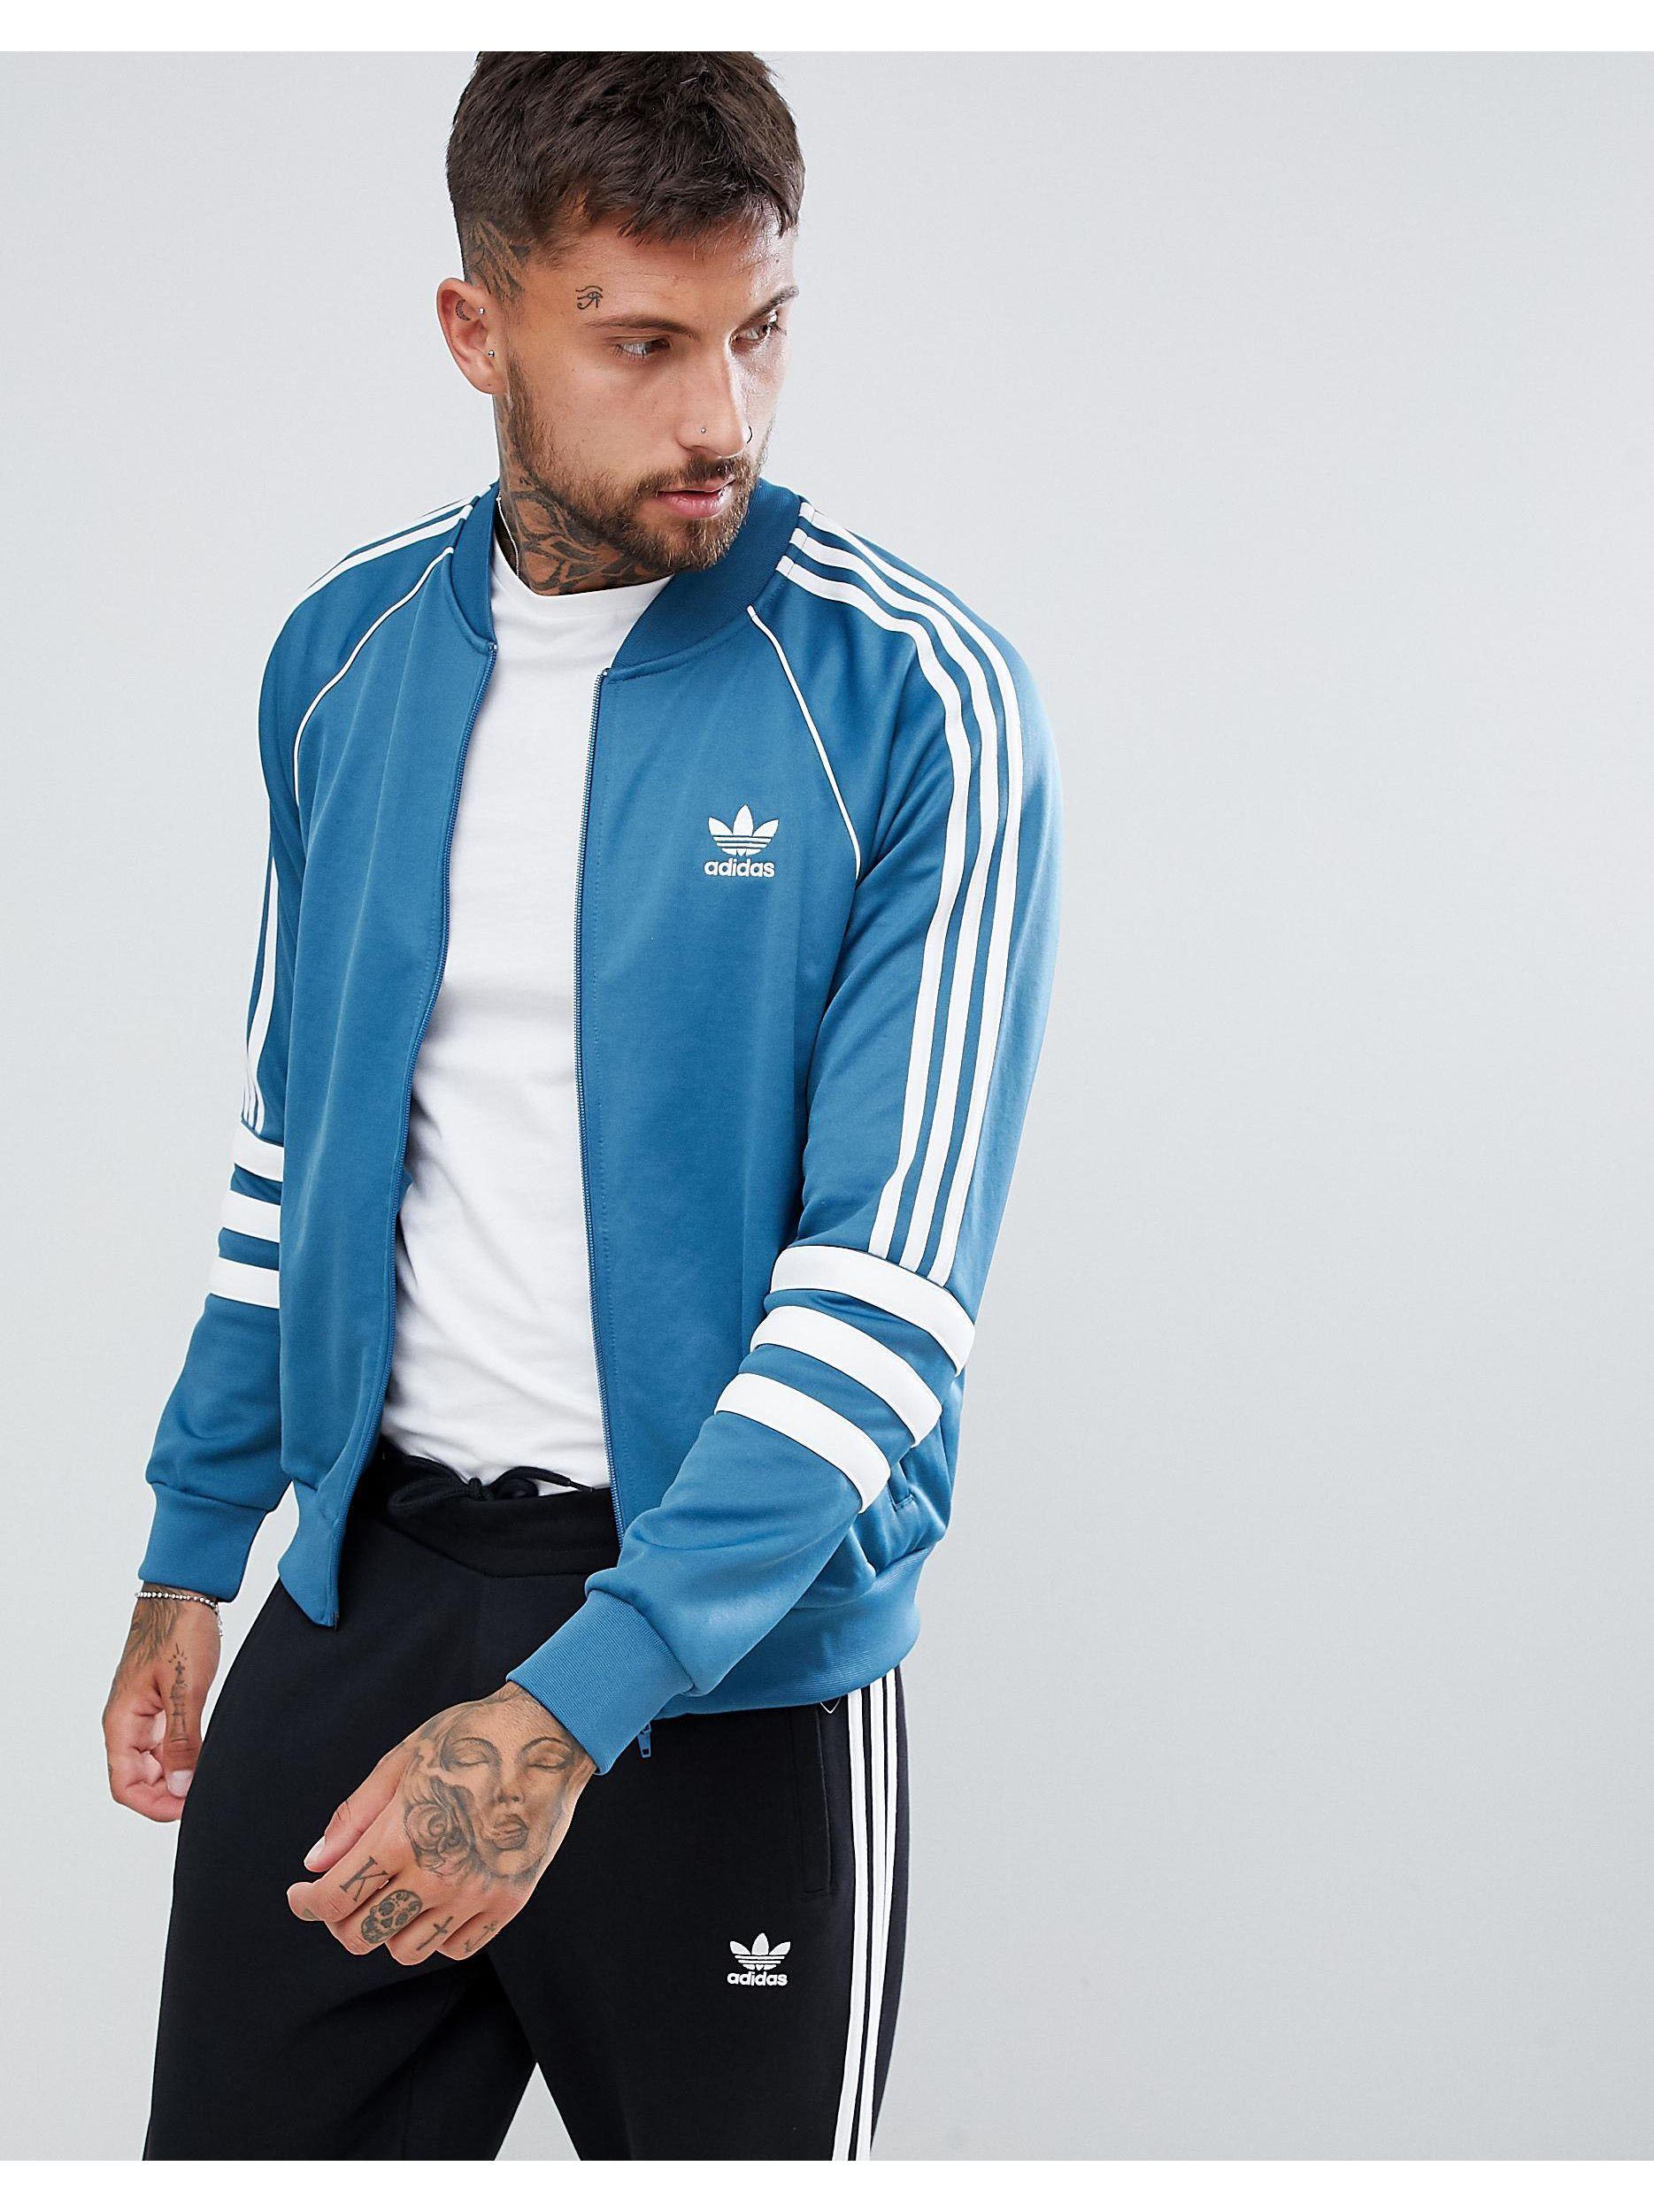 adidas Originals Authentic Superstar Track Jacket in Blue for Men - Lyst